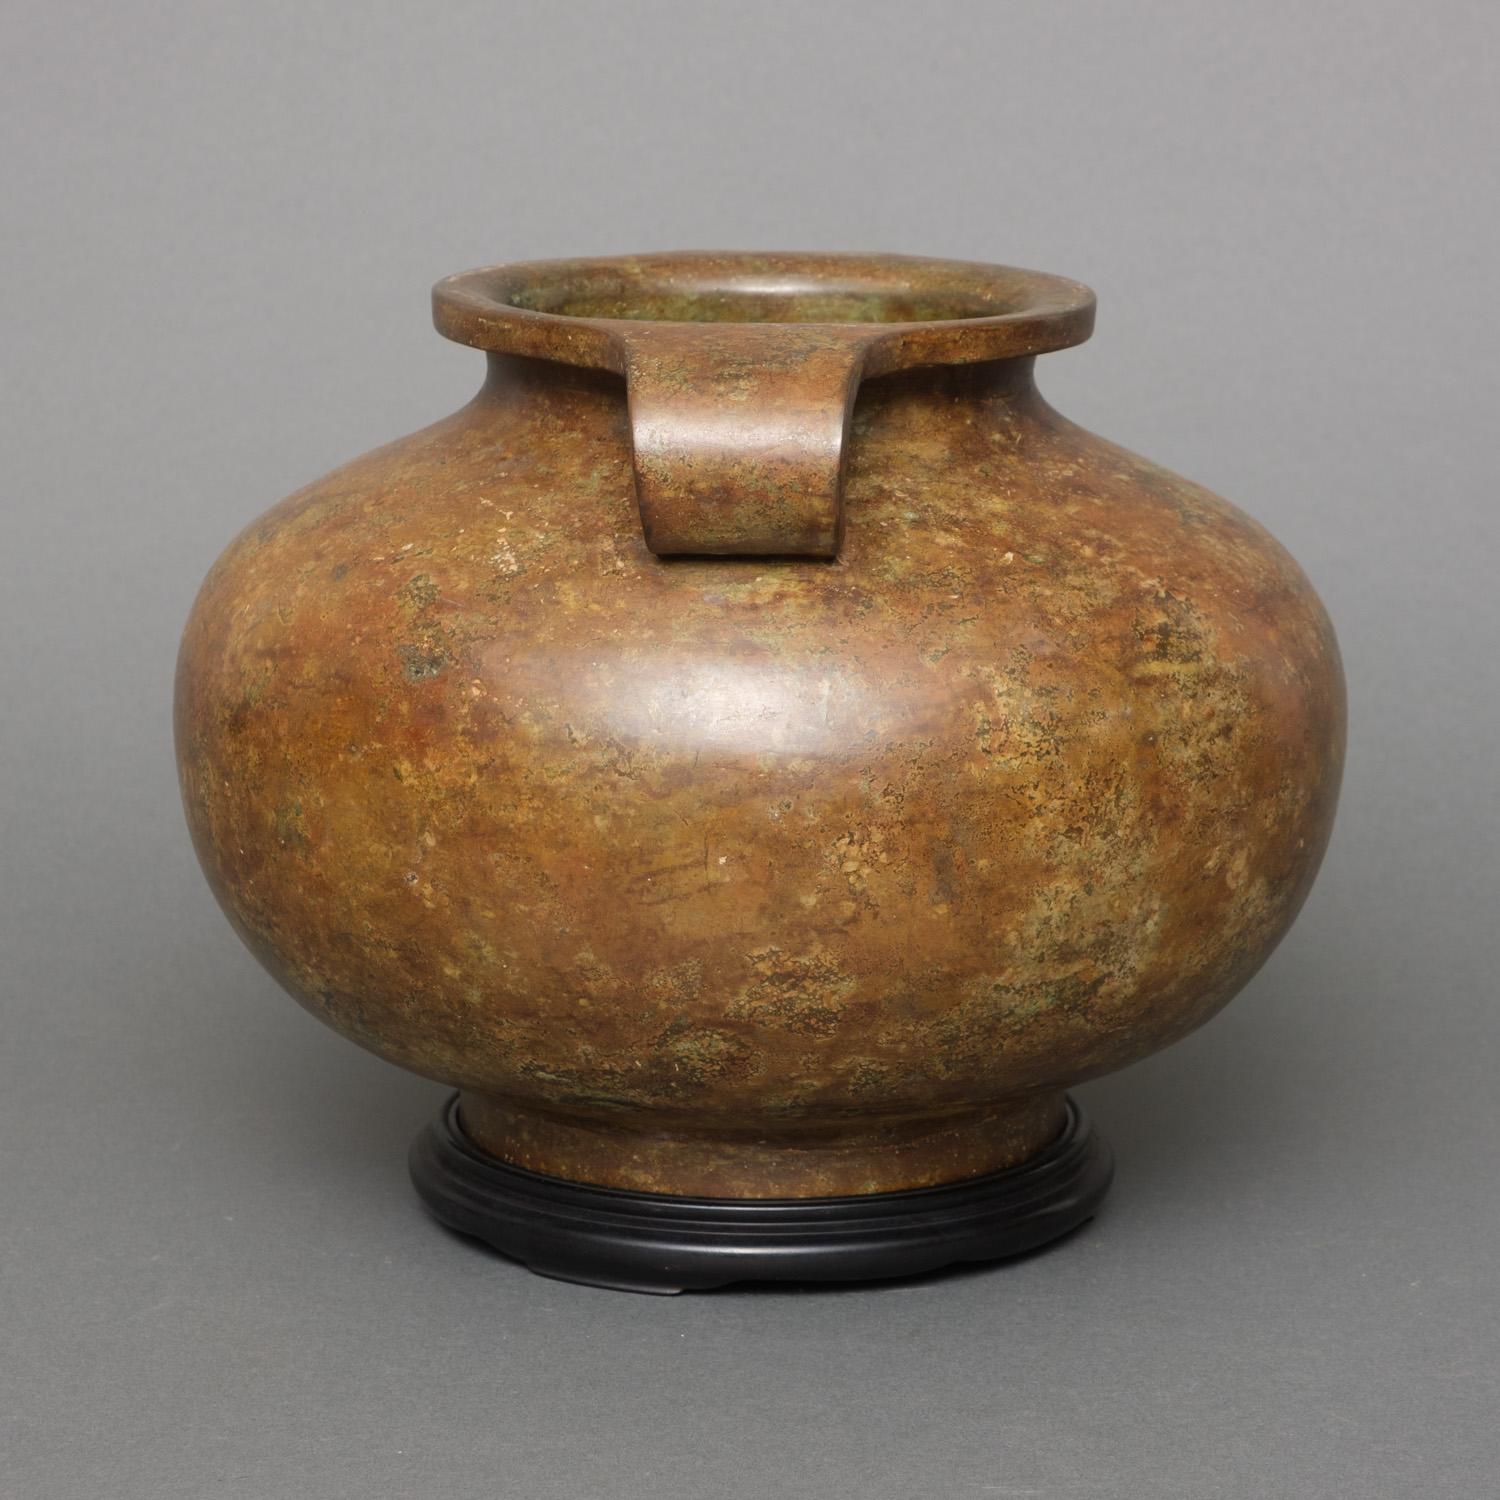 Patinated Large & impressive Japanese brown/ochre patinated bronze urn-shaped vase